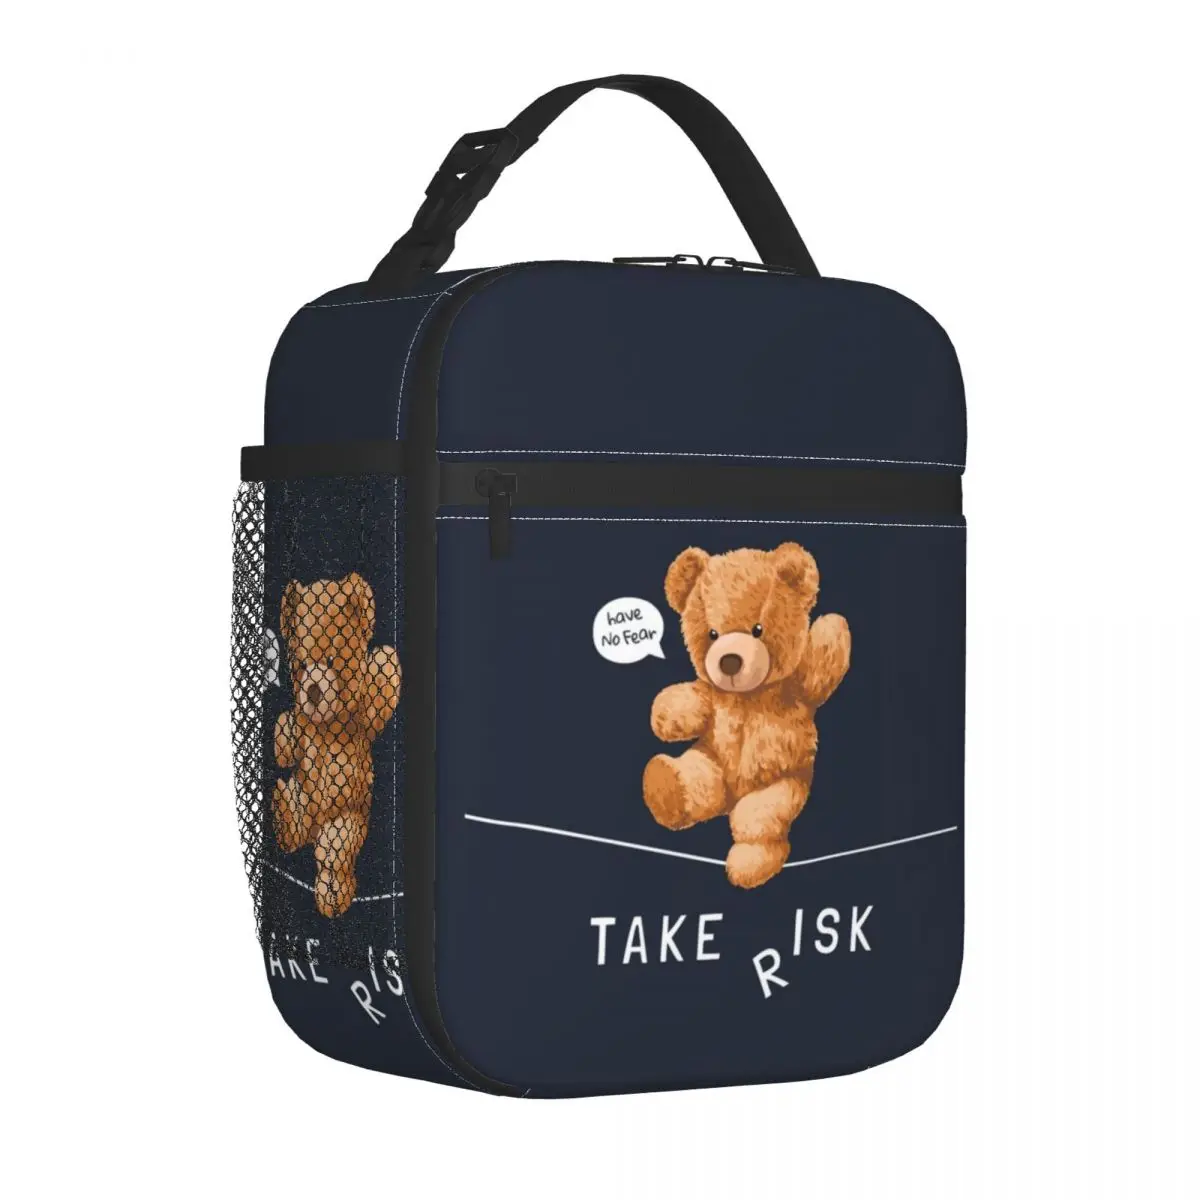 

Bear Toy Walking On String Lunch Bag Have No Fear Take Risk Office Mesh Pocket Cooler Bag Cooling Pearl Cotton Thermal Bag